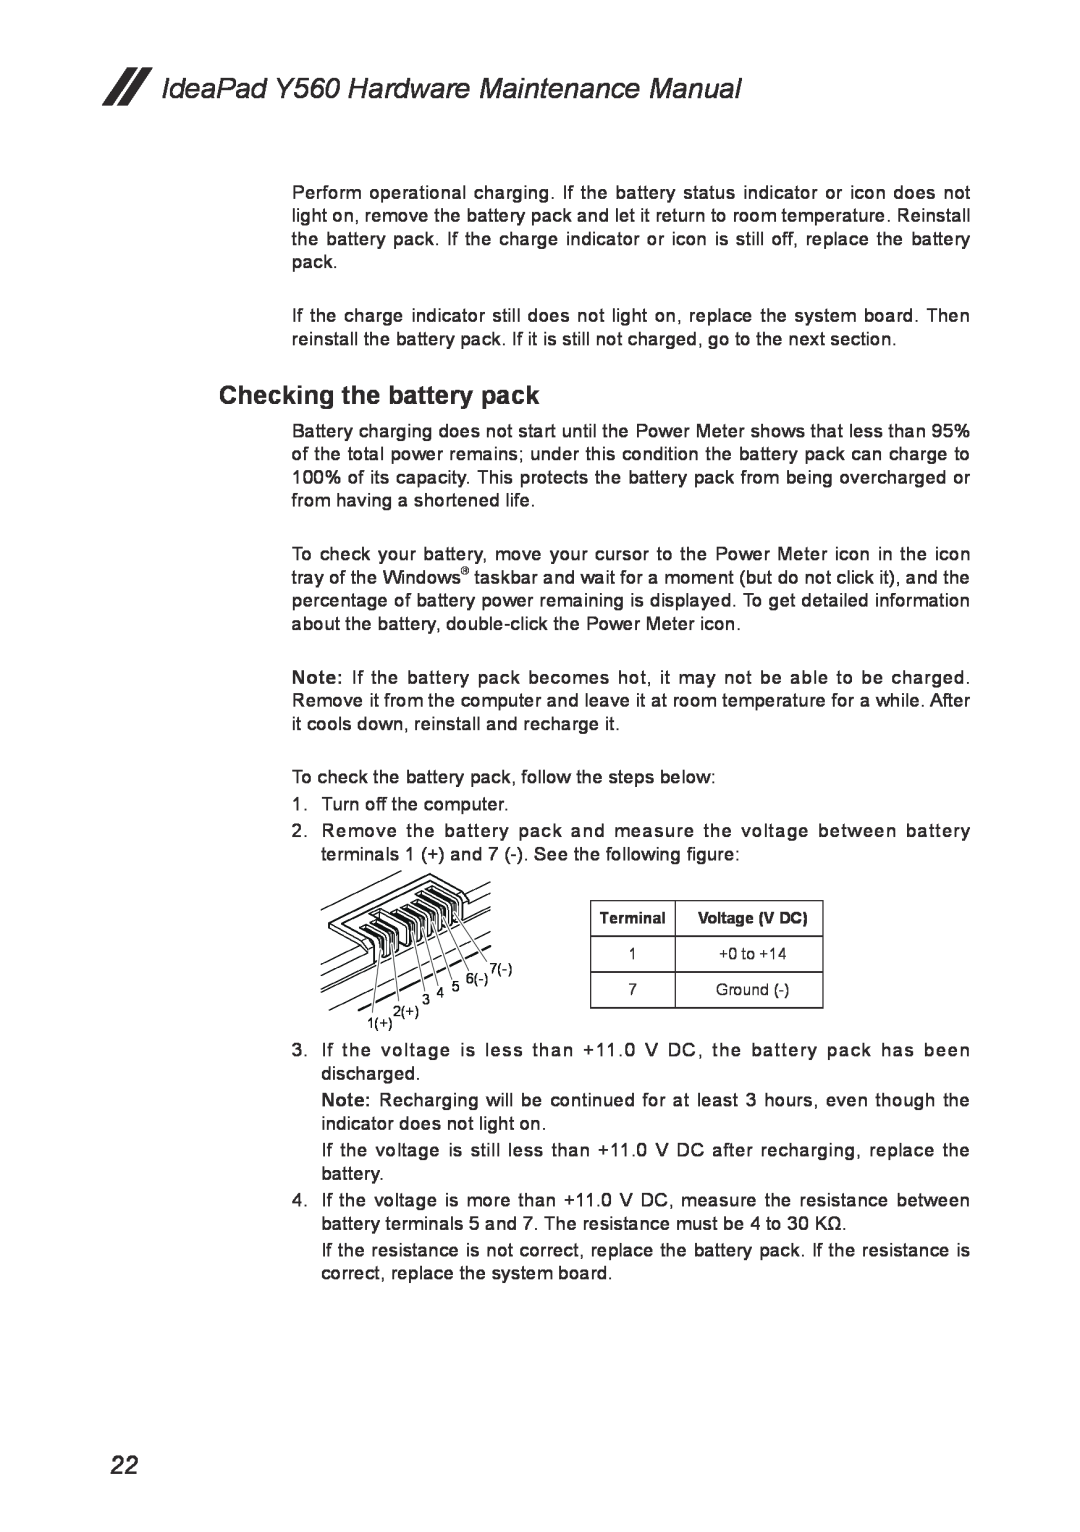 Lenovo manual Checking the battery pack, IdeaPad Y560 Hardware Maintenance Manual 